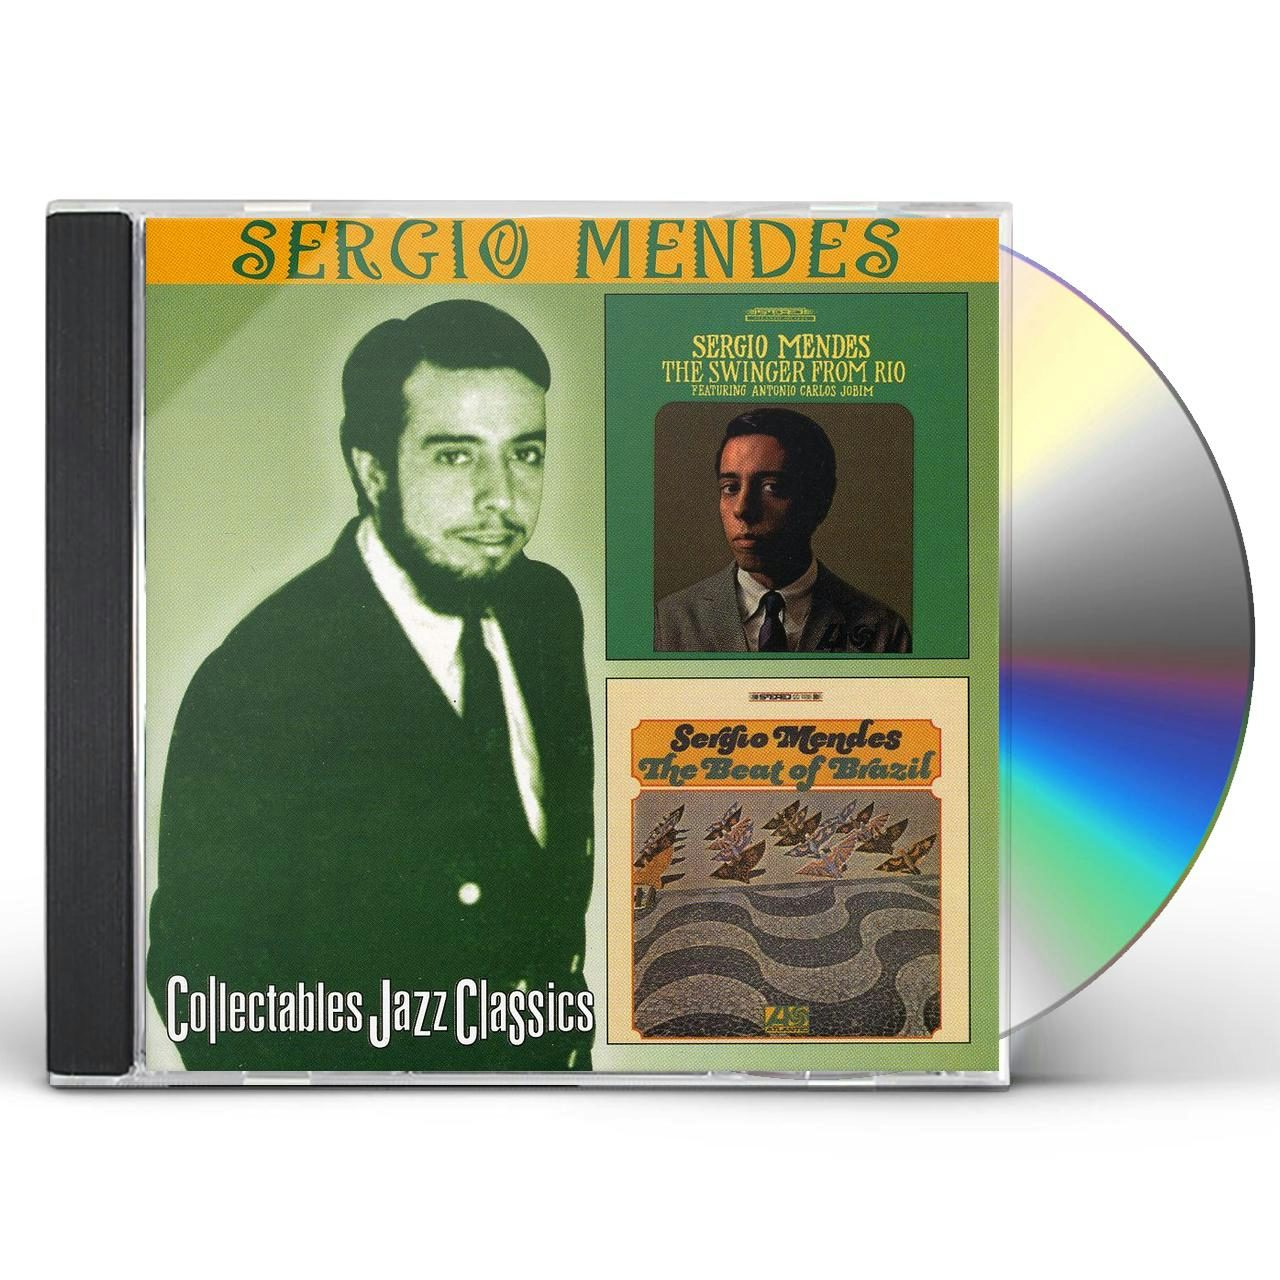 AOR CD Sergio mendes brasil 88-